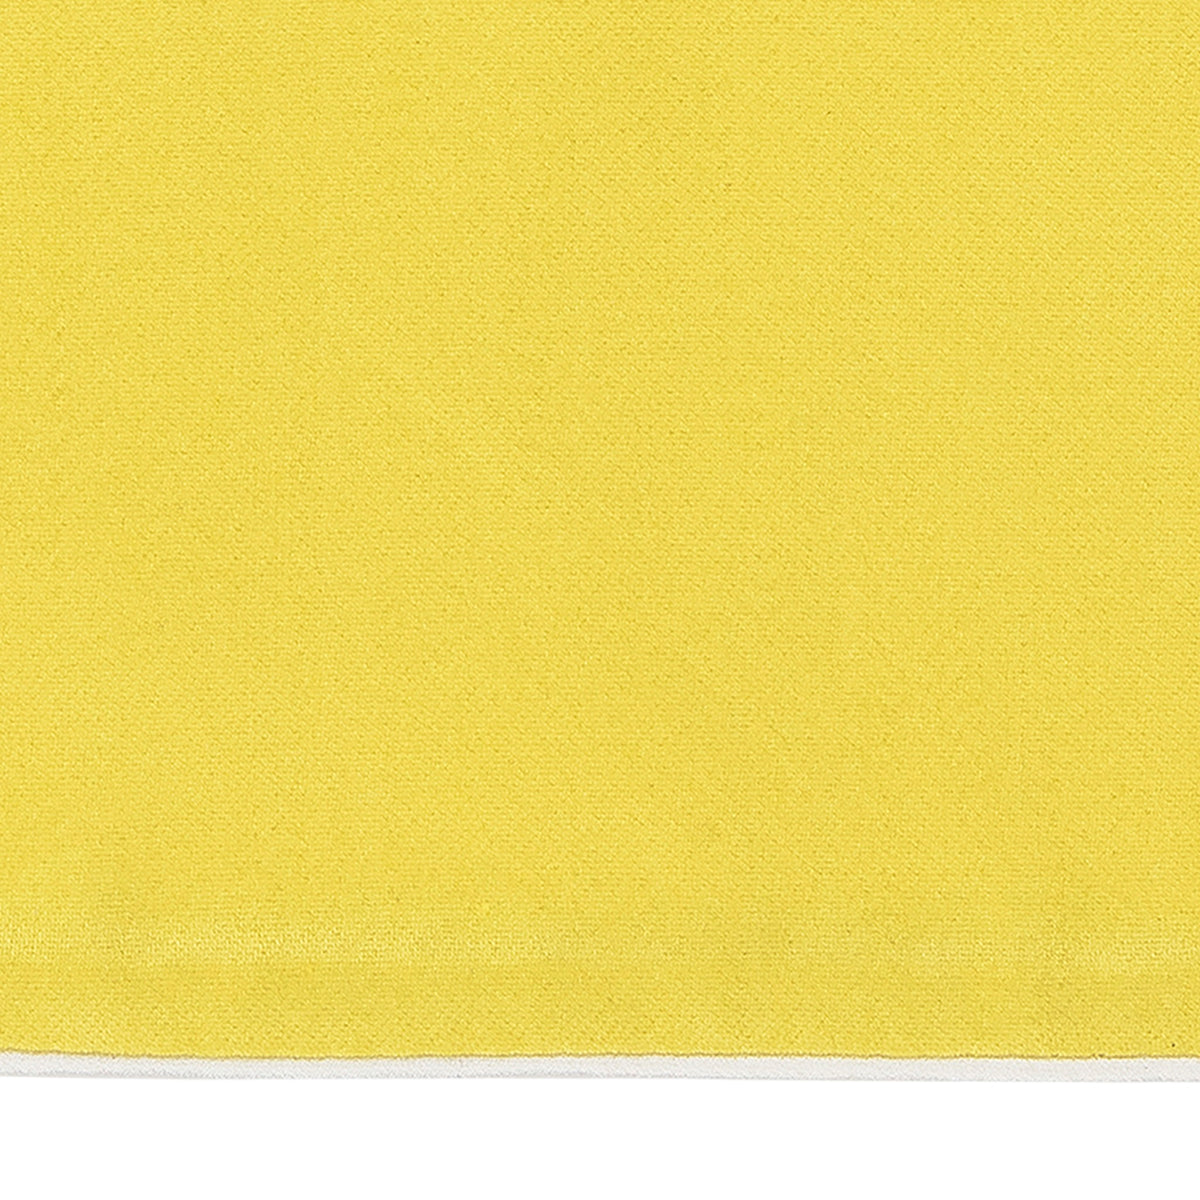 Swatch Sample of Matouk Nocturne Pajama Set in Color Lemon and Bone